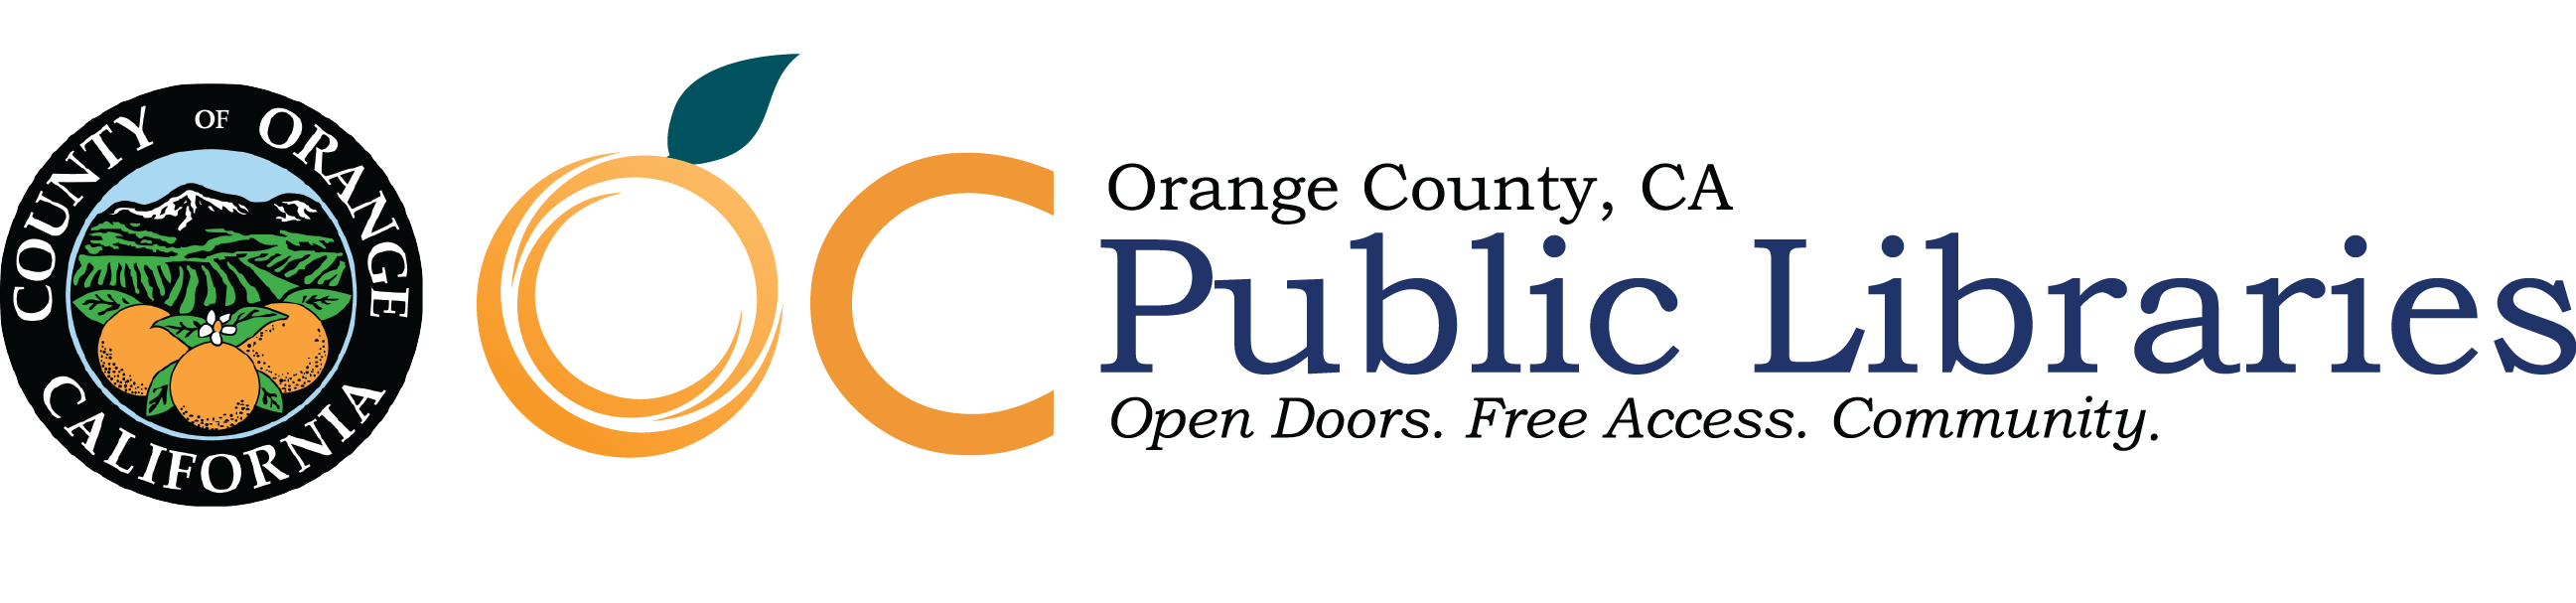 OC Public Libraries Logo